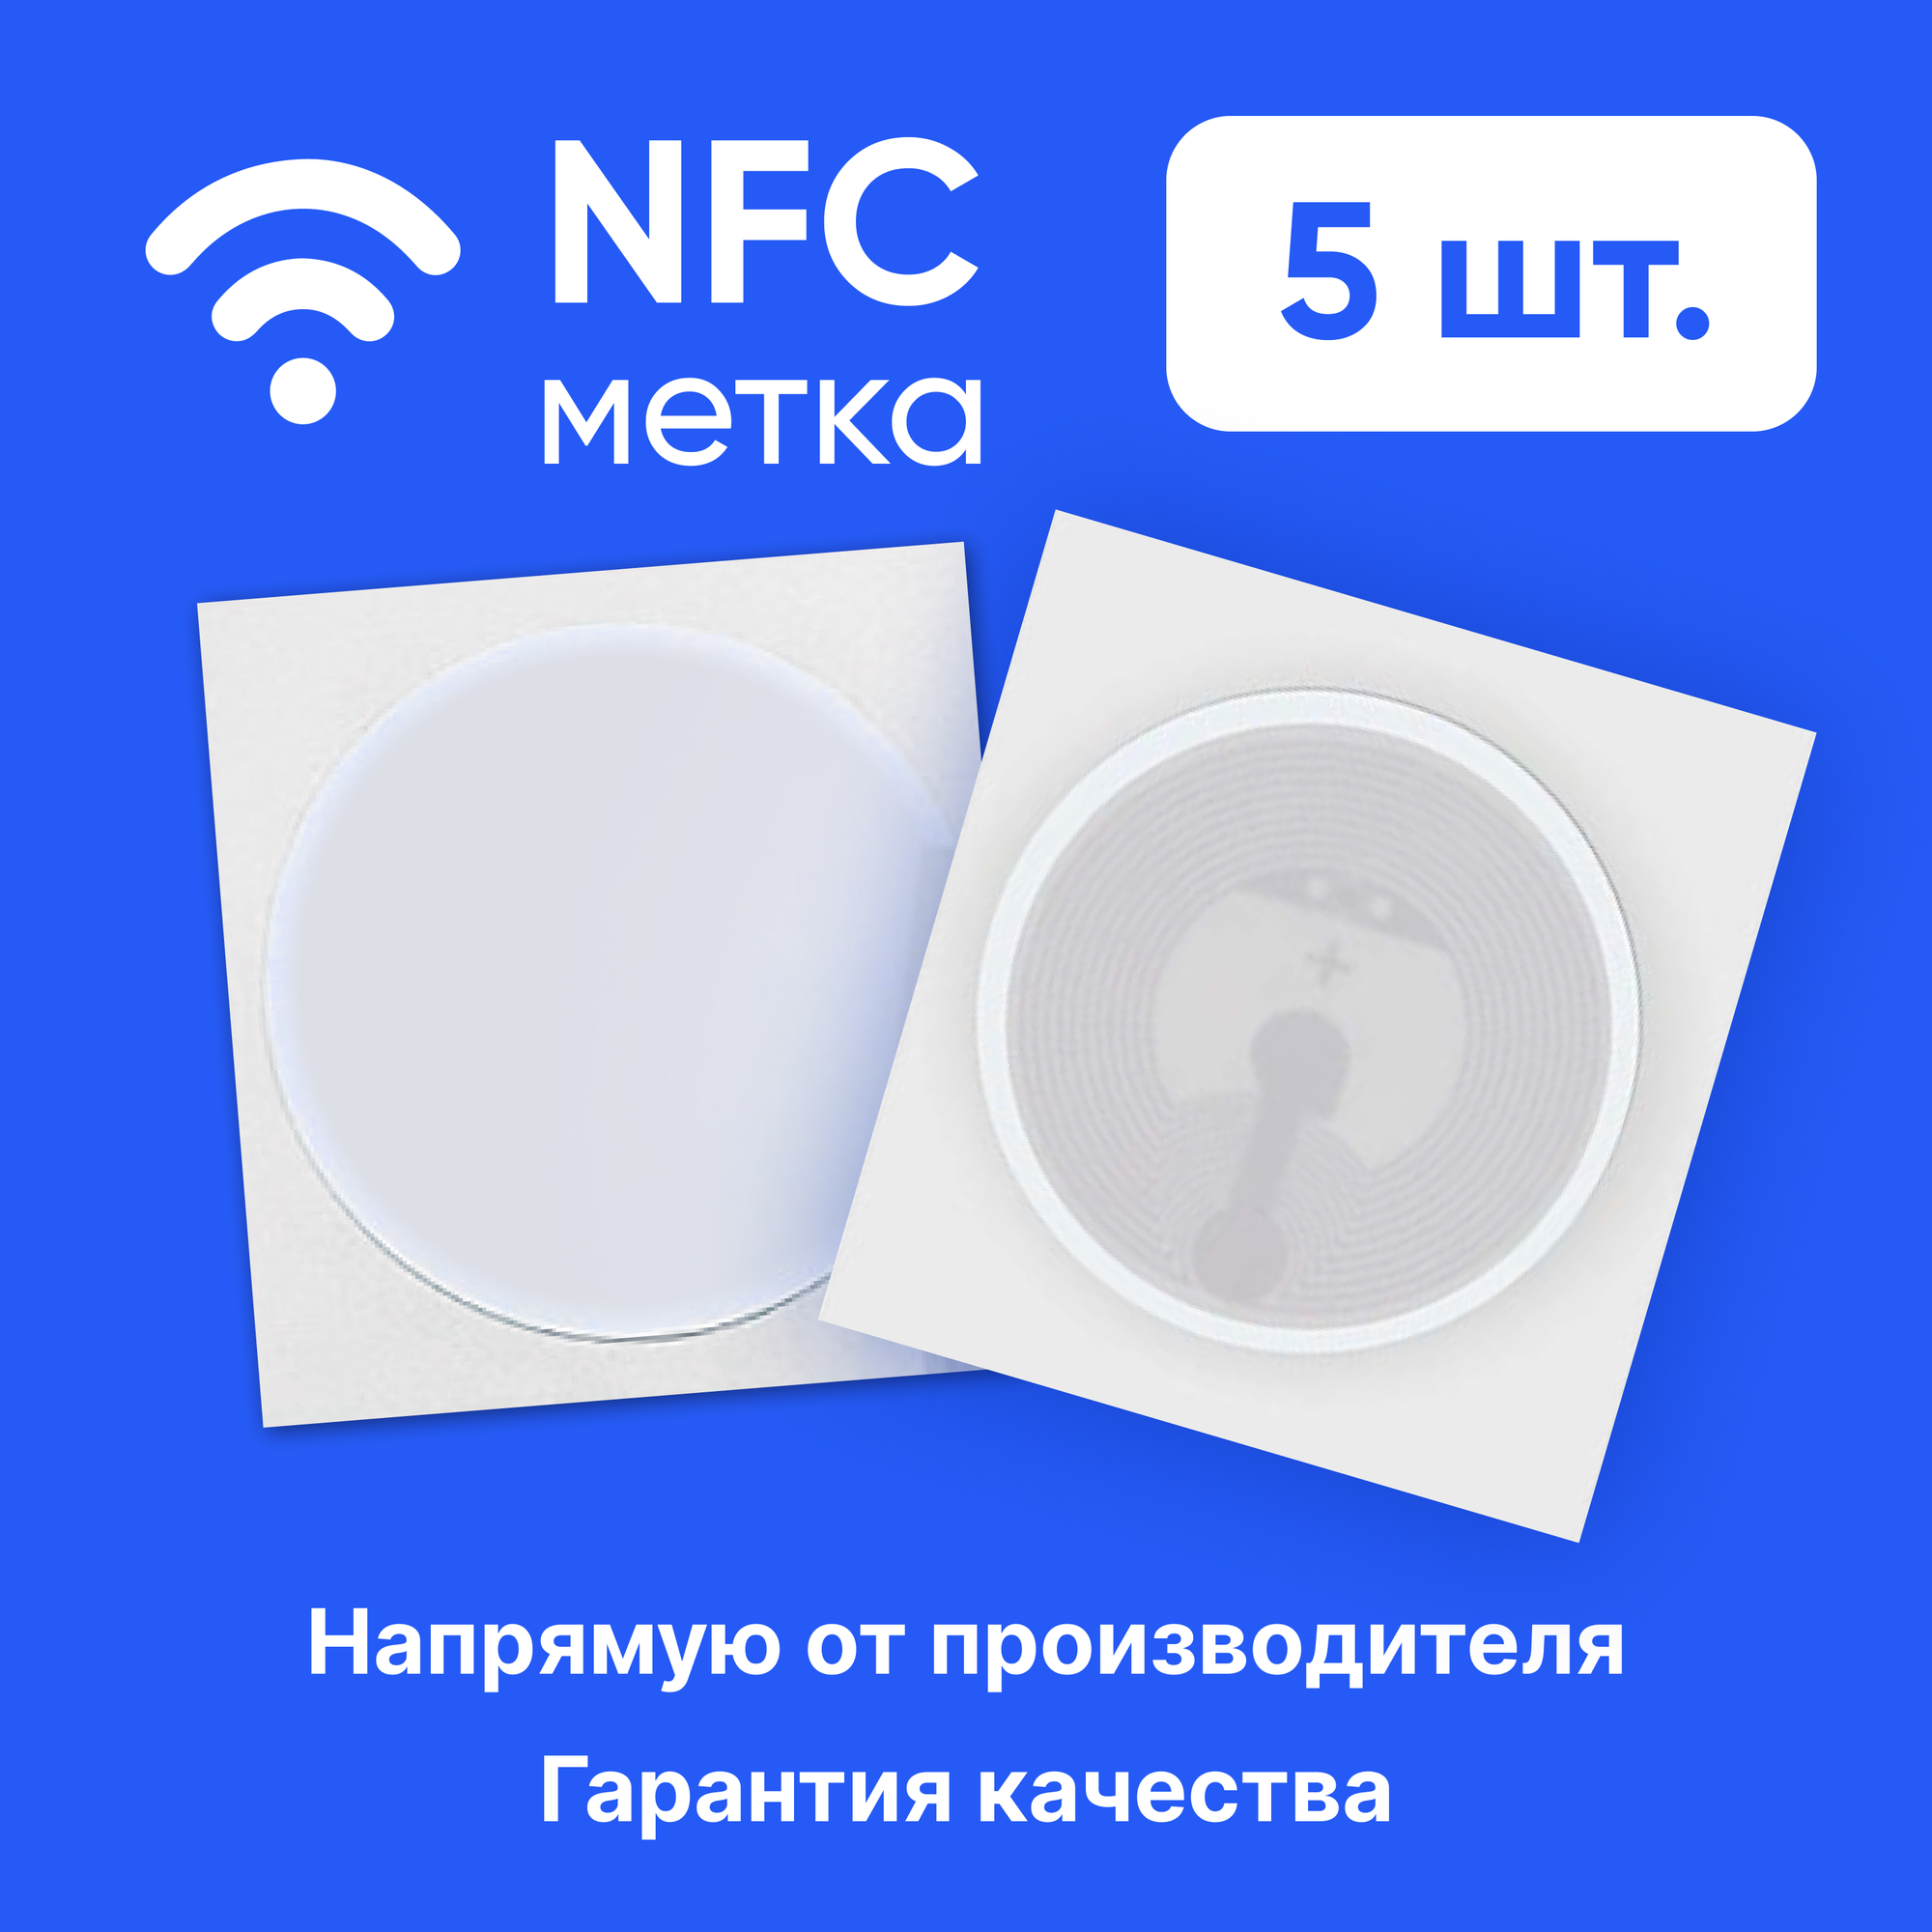 NFC метки для автоматизации, 5 штук